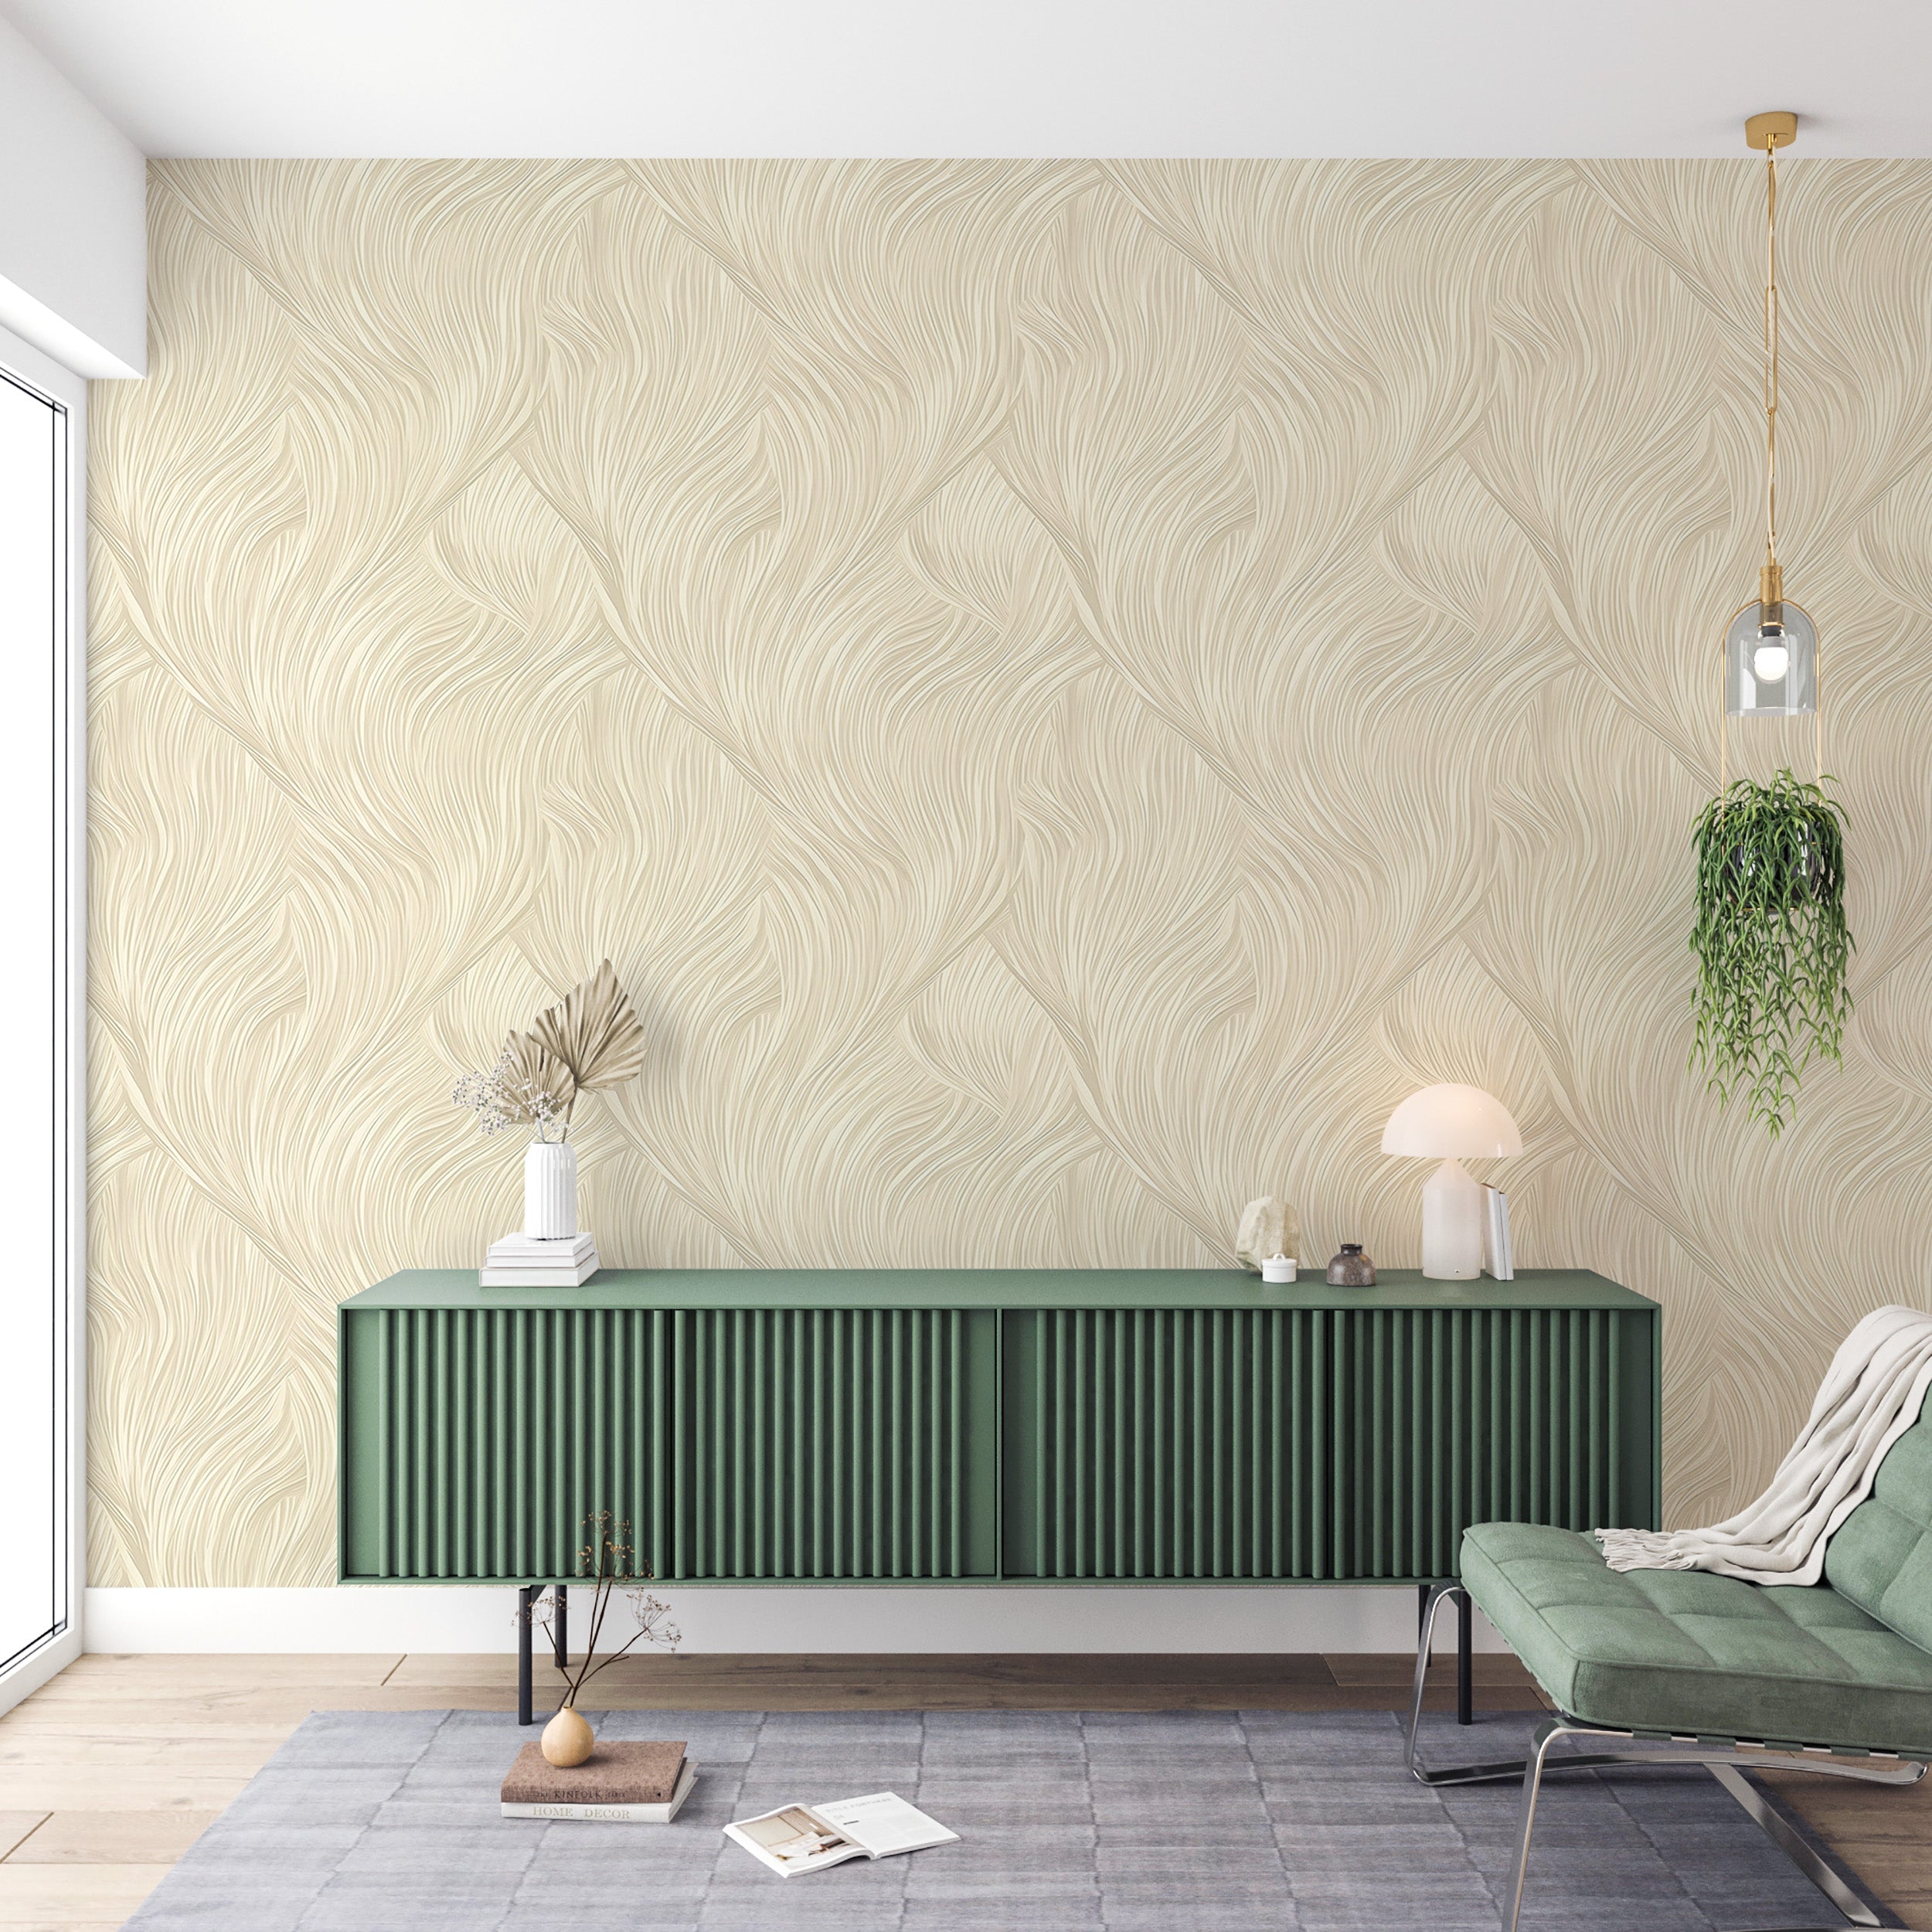 Waves Texture Wallpaper Detail for Calming Decor